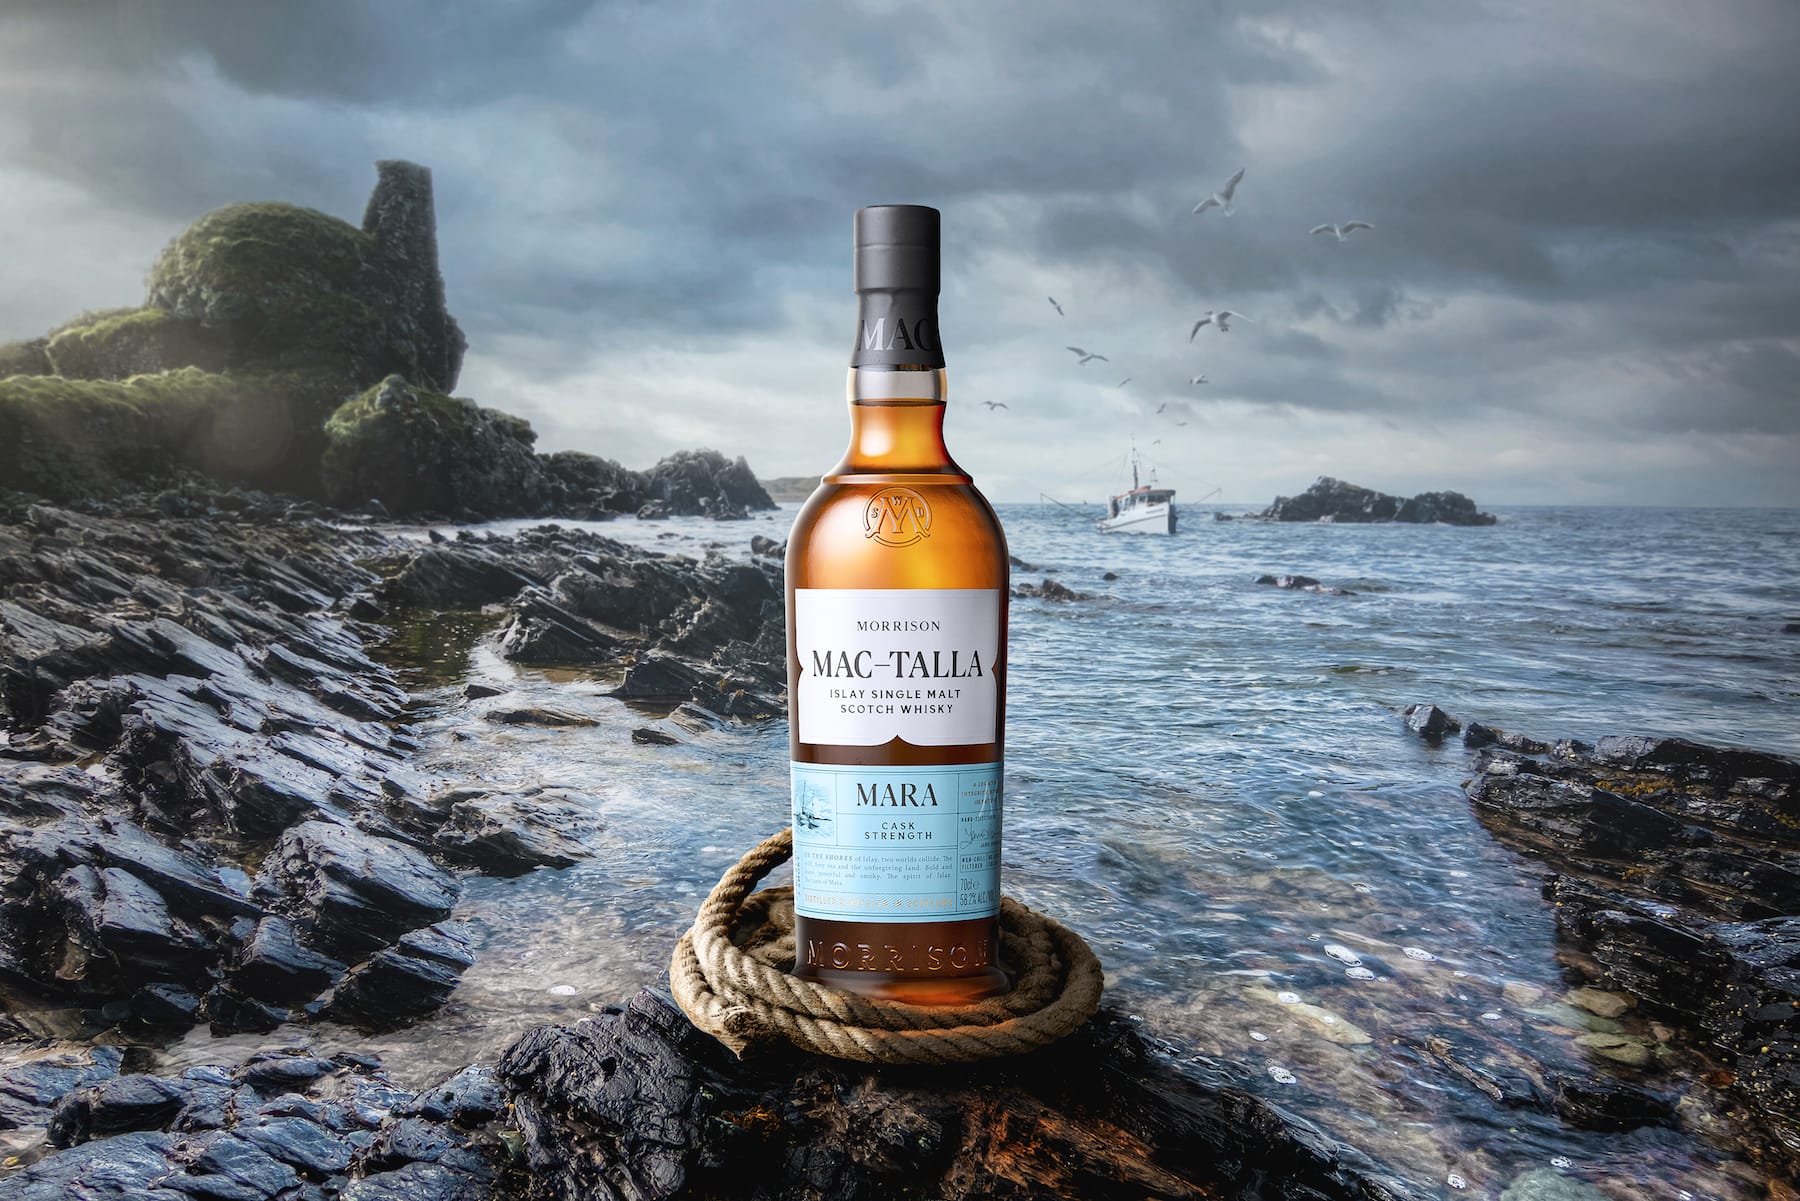 MacTalla Islay Single Malt Scotch Whisky from Morrison Distillers